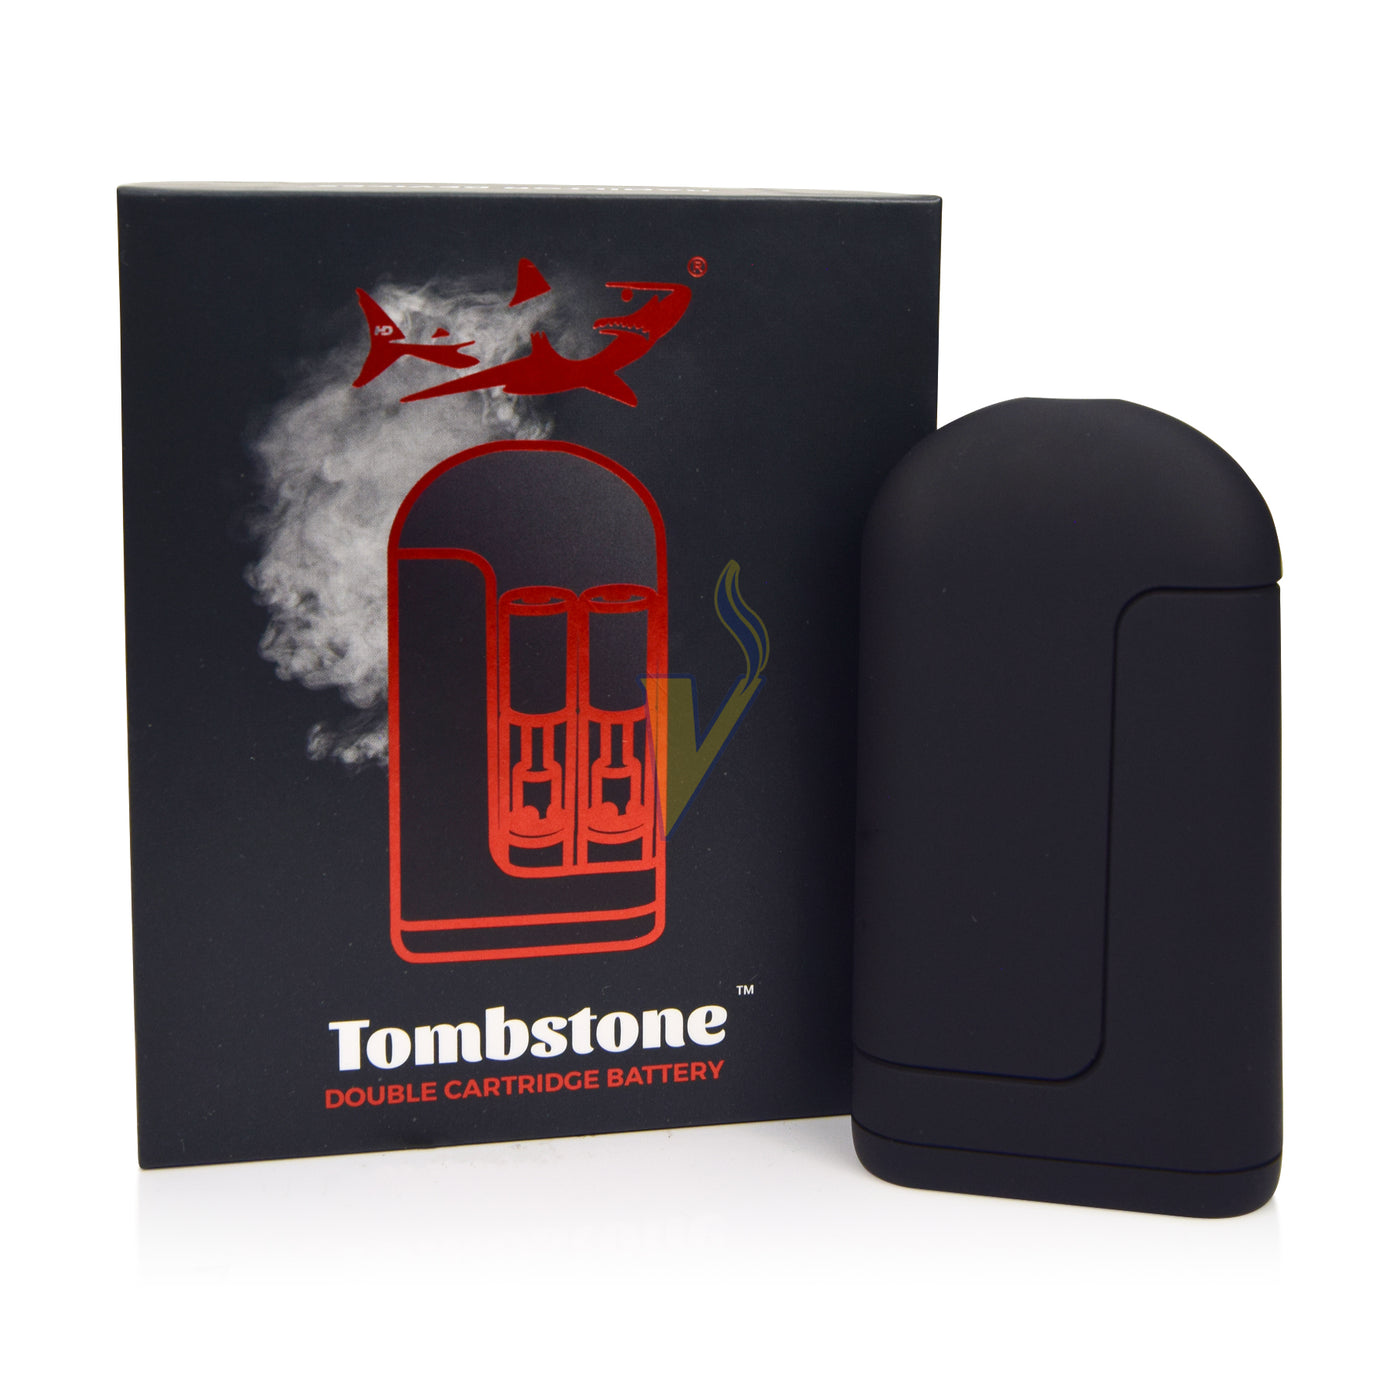 Hamilton Tombstone Double Cartridge Vaporizer Battery